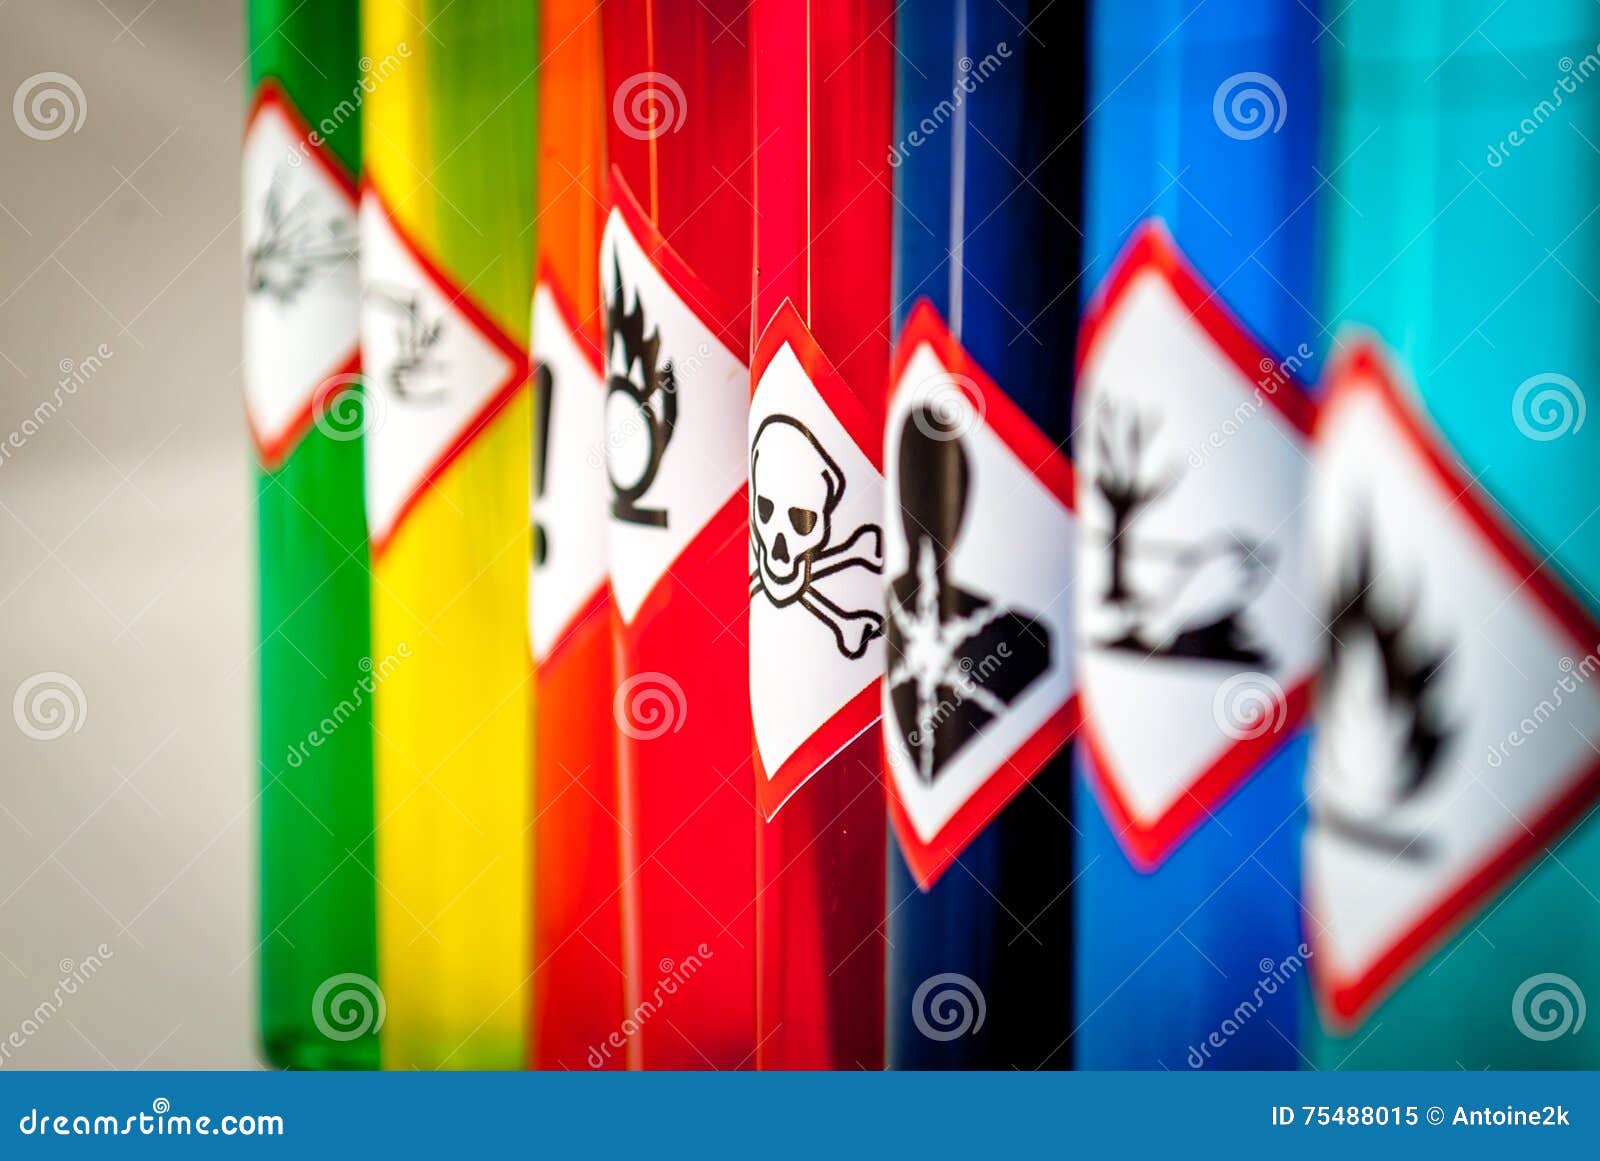 chemical hazard pictograms toxic focus